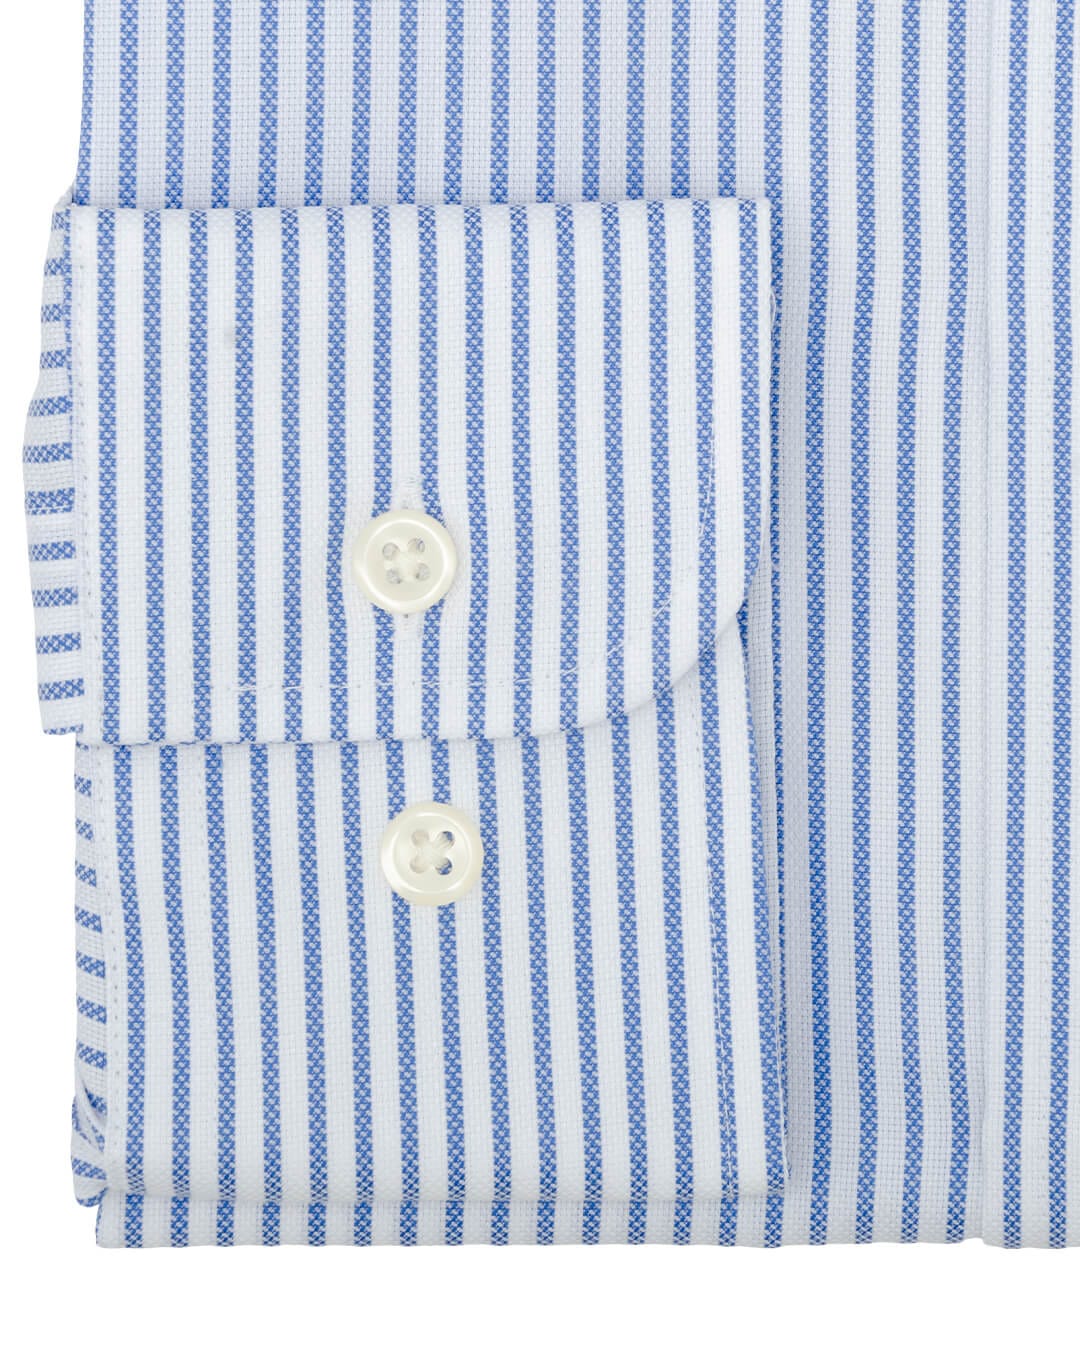 Gagliardi Shirts Gagliardi Tailored Fit Blue Bengal Striped Non Iron Oxford Cotton Shirt